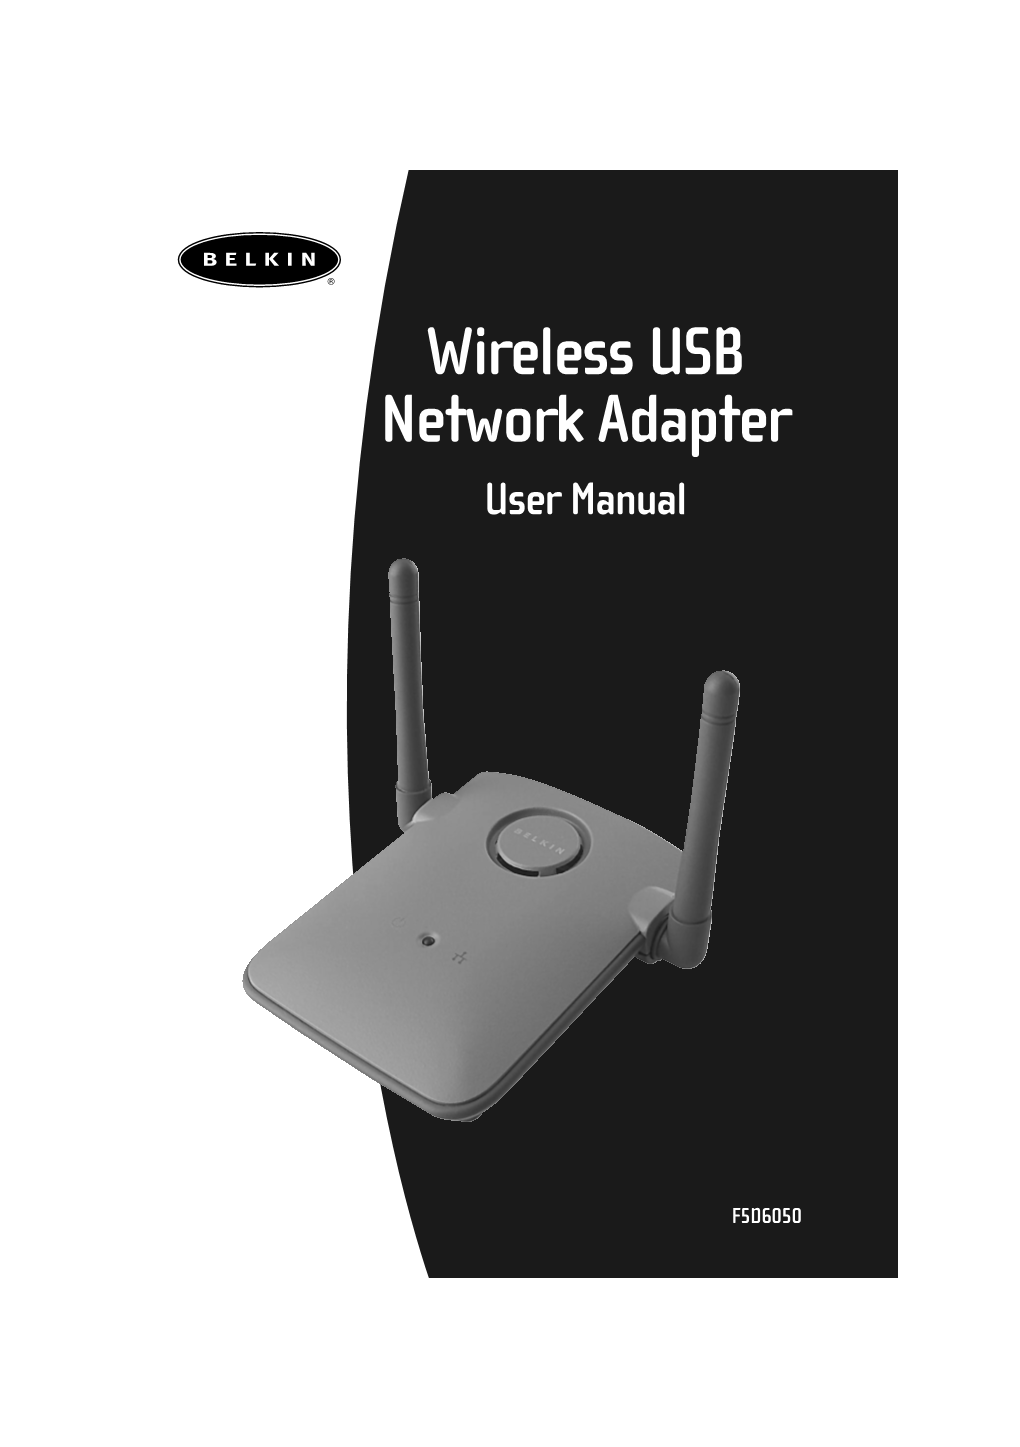 Wireless USB Network Adapter User Manual